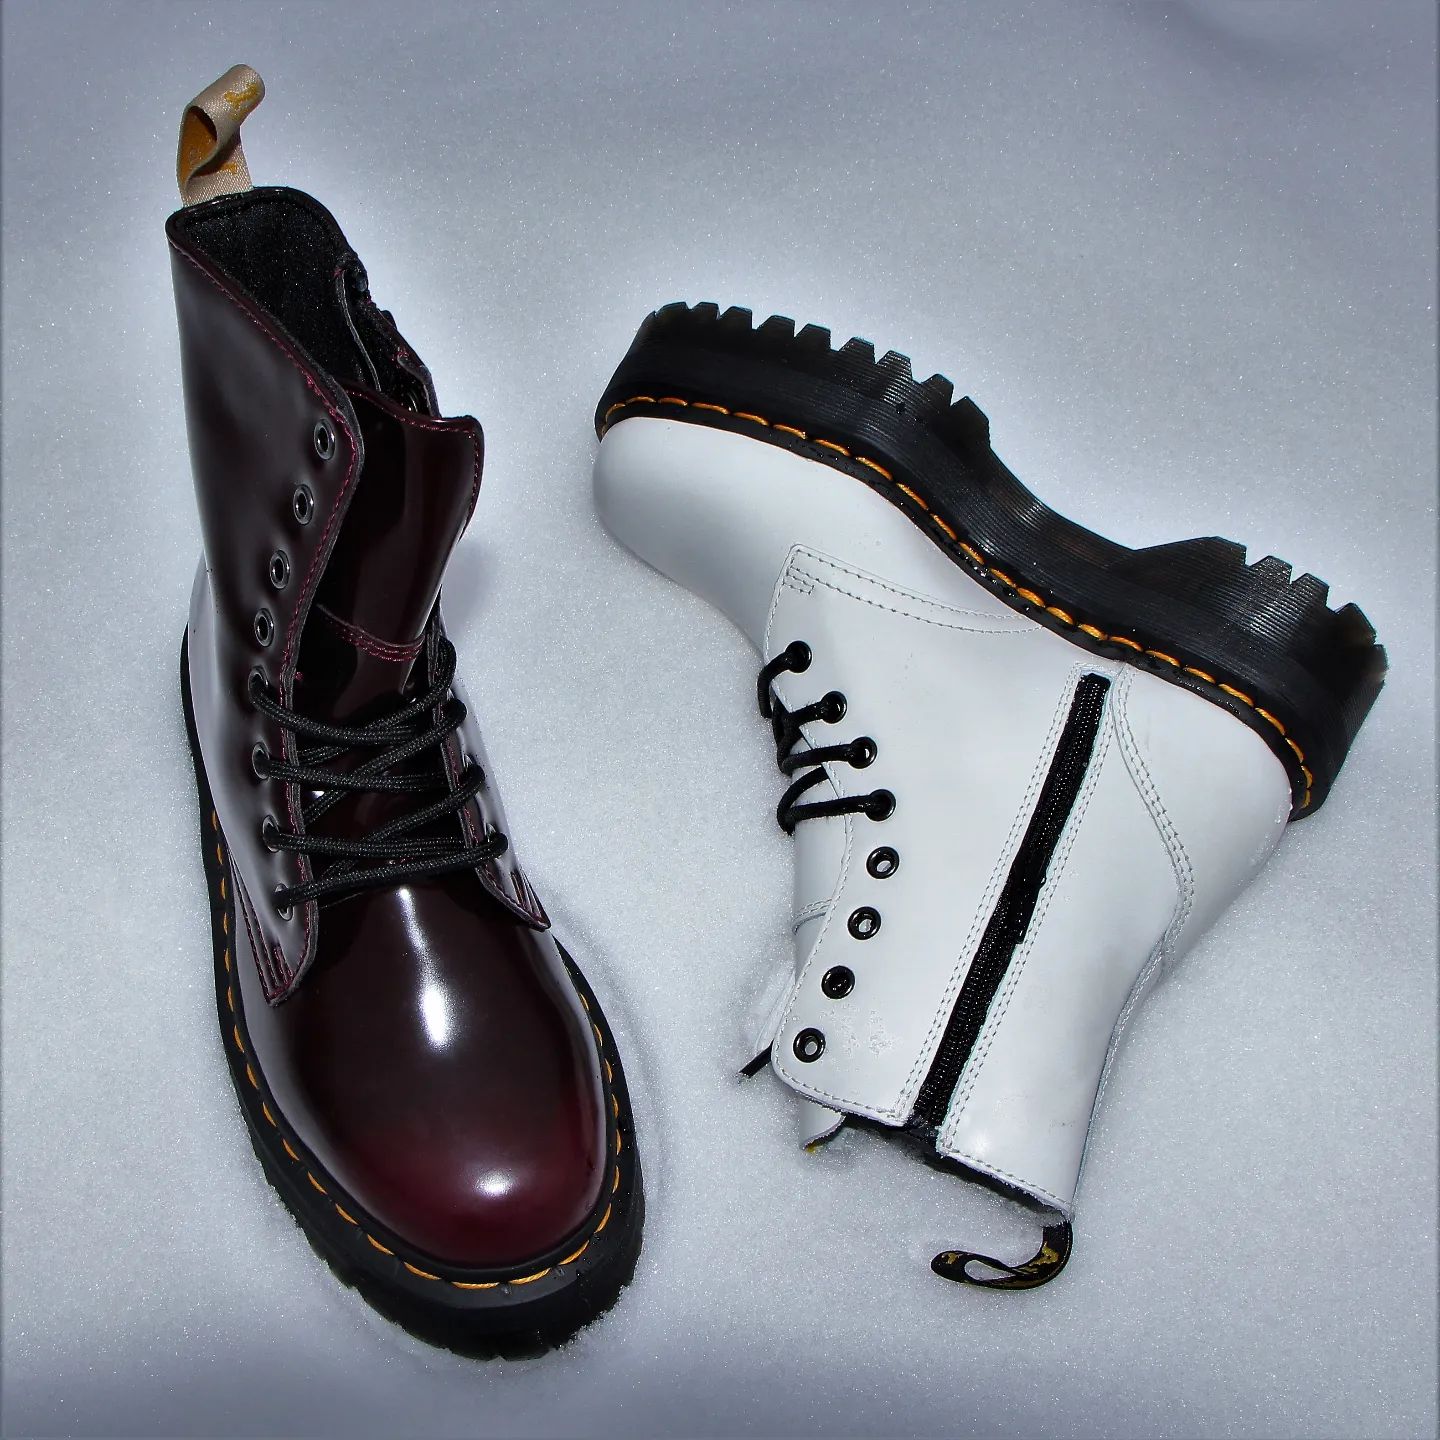 🌀SALE 🌀SALE 🌀SALE 🌀

🤍💛 Dr. Martens Jadon Polished Smooth Leather Platform Boots White
15265100
+
❤️💛 Dr. Martens Vegan Jadon II Platform Boots Cherry Red Oxford Rub Off
22563600

––––––––––
Цена со скидкой:
559.00 BYN
⚡Размеры белых:
36,-38, 40
⚡Размеры вишёвых:
36-41

––––––––––
📍ТЦ Немига 3, 3 этаж, пав.15
📍ТЦ Московско-венский, 3 этаж, пав. 331
☎️ +375296846891
☎️ +375292536197
☎️ +375296637585

––––––––––
#inshoezz #drmartens #docmartens #doctormartens #drmartensjadon #drmartensplatform #drmartensplatformboots #drmartensboots #drmartensminsk #yesdrmartens #allaboutdrmartens #toughasyou #drmartensbelarus #worndifferent #airwair #docs4life #drmartensoriginal #drmartensstyle #drmartenstyle #lovemydocs #docsoftheday #мартинсыминск #мартинсыбеларусь  #drmartensrepost #martens #drmartins #мартинсы #jadon